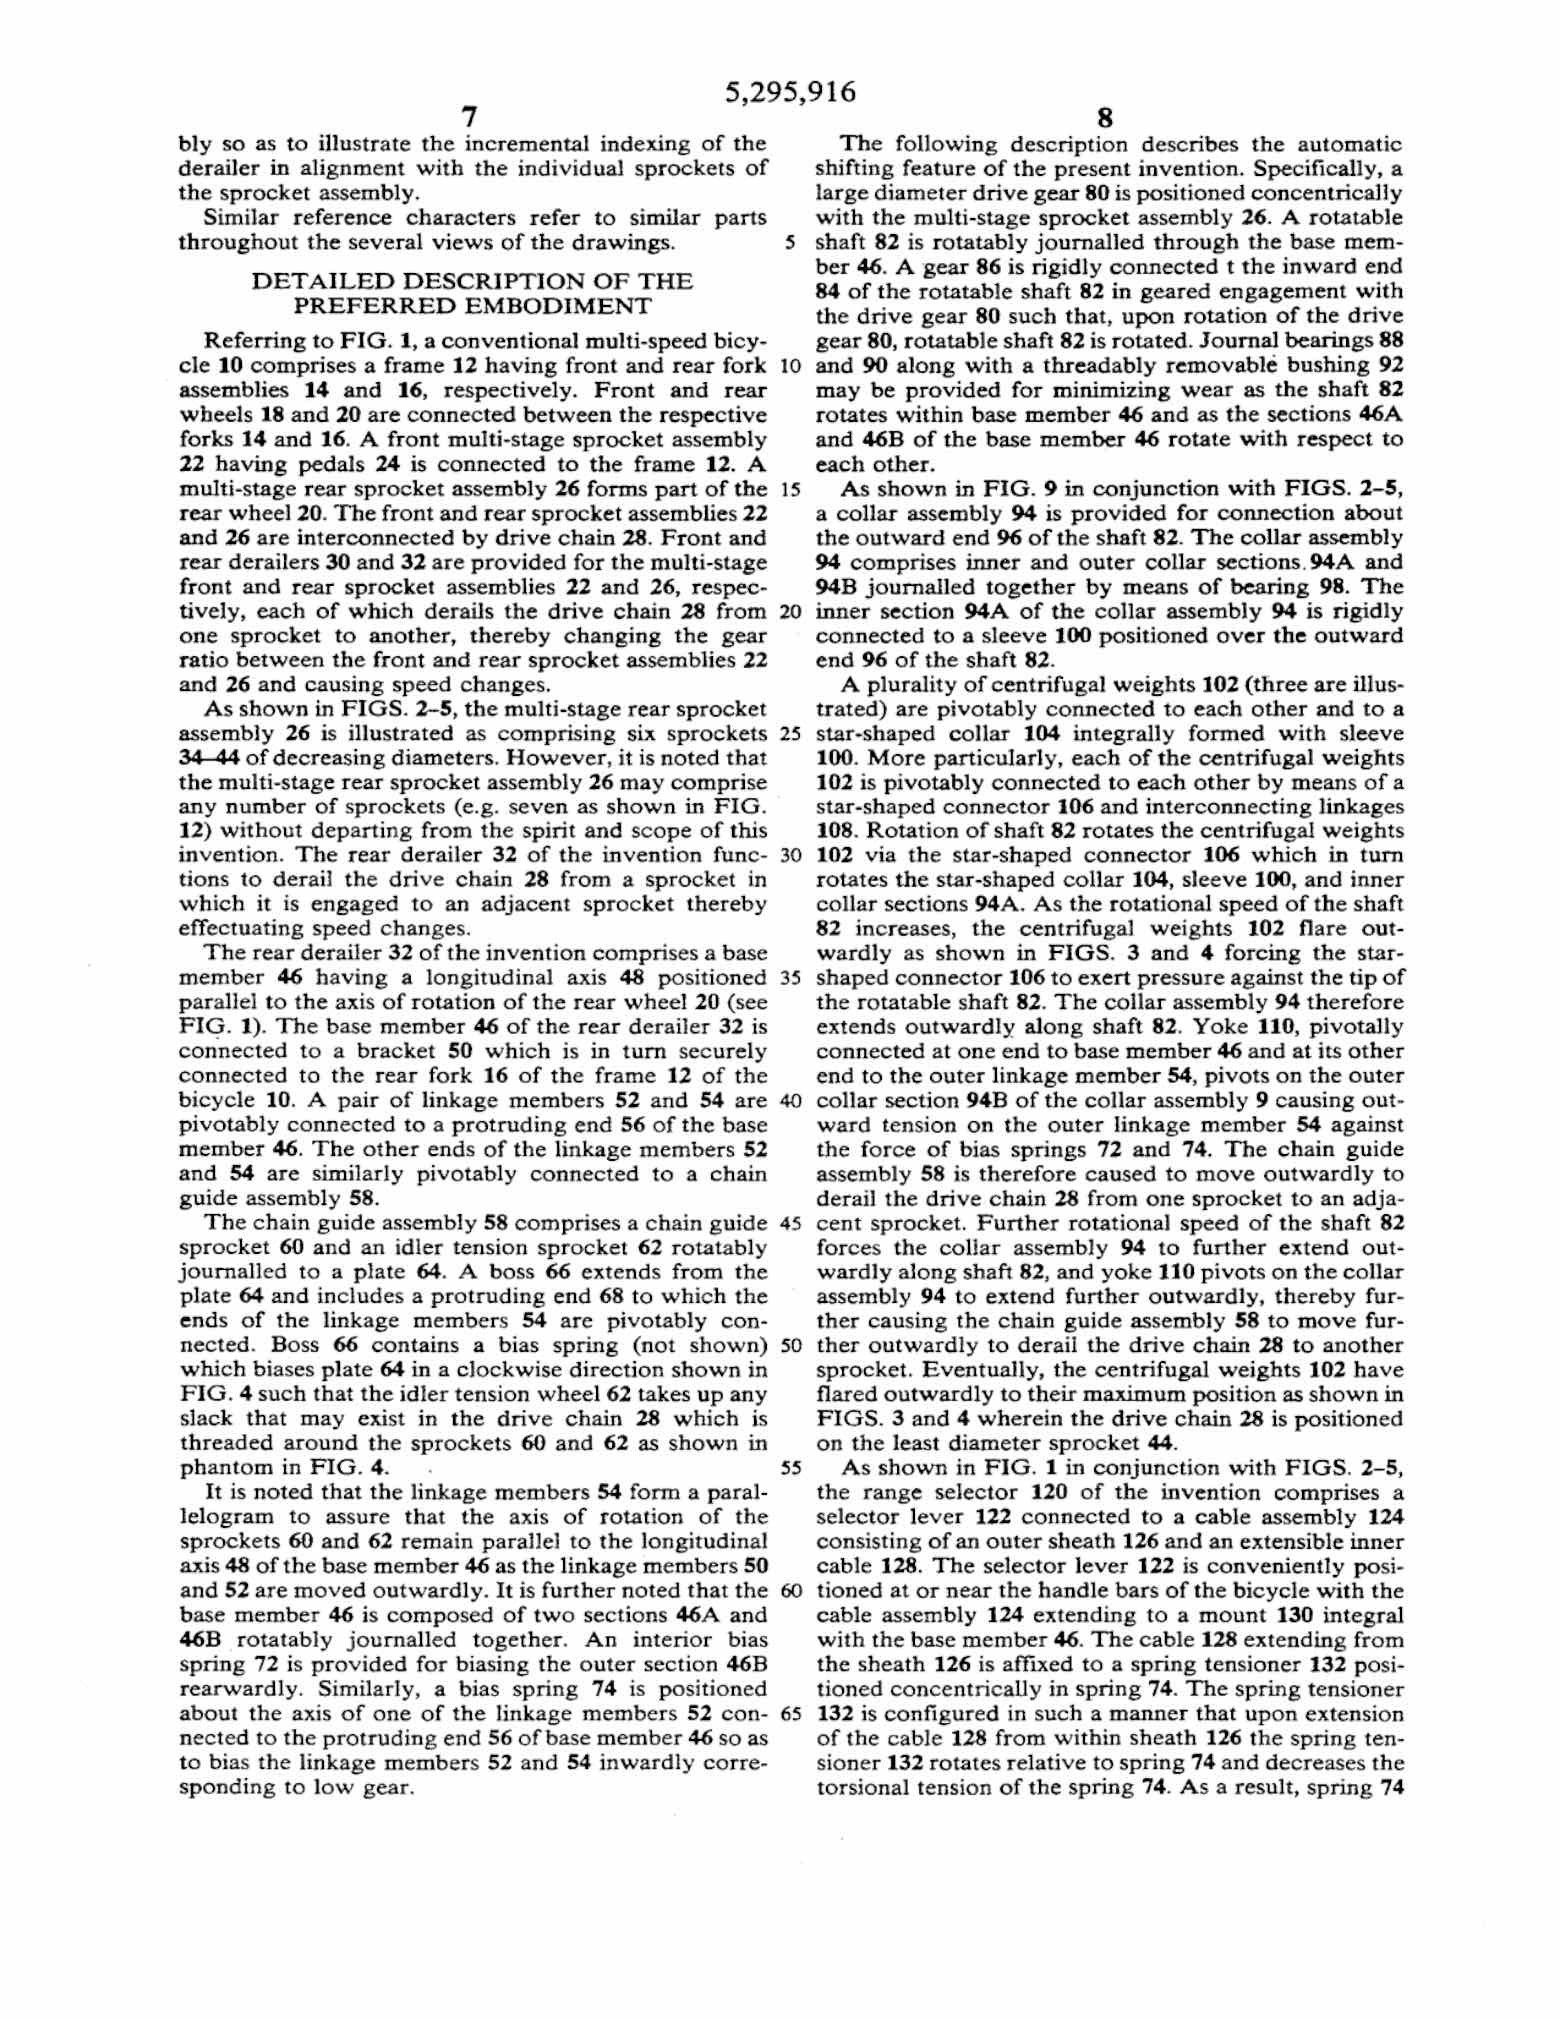 US Patent 5,295,916 - AutoBike SmartShift scan 5 main image